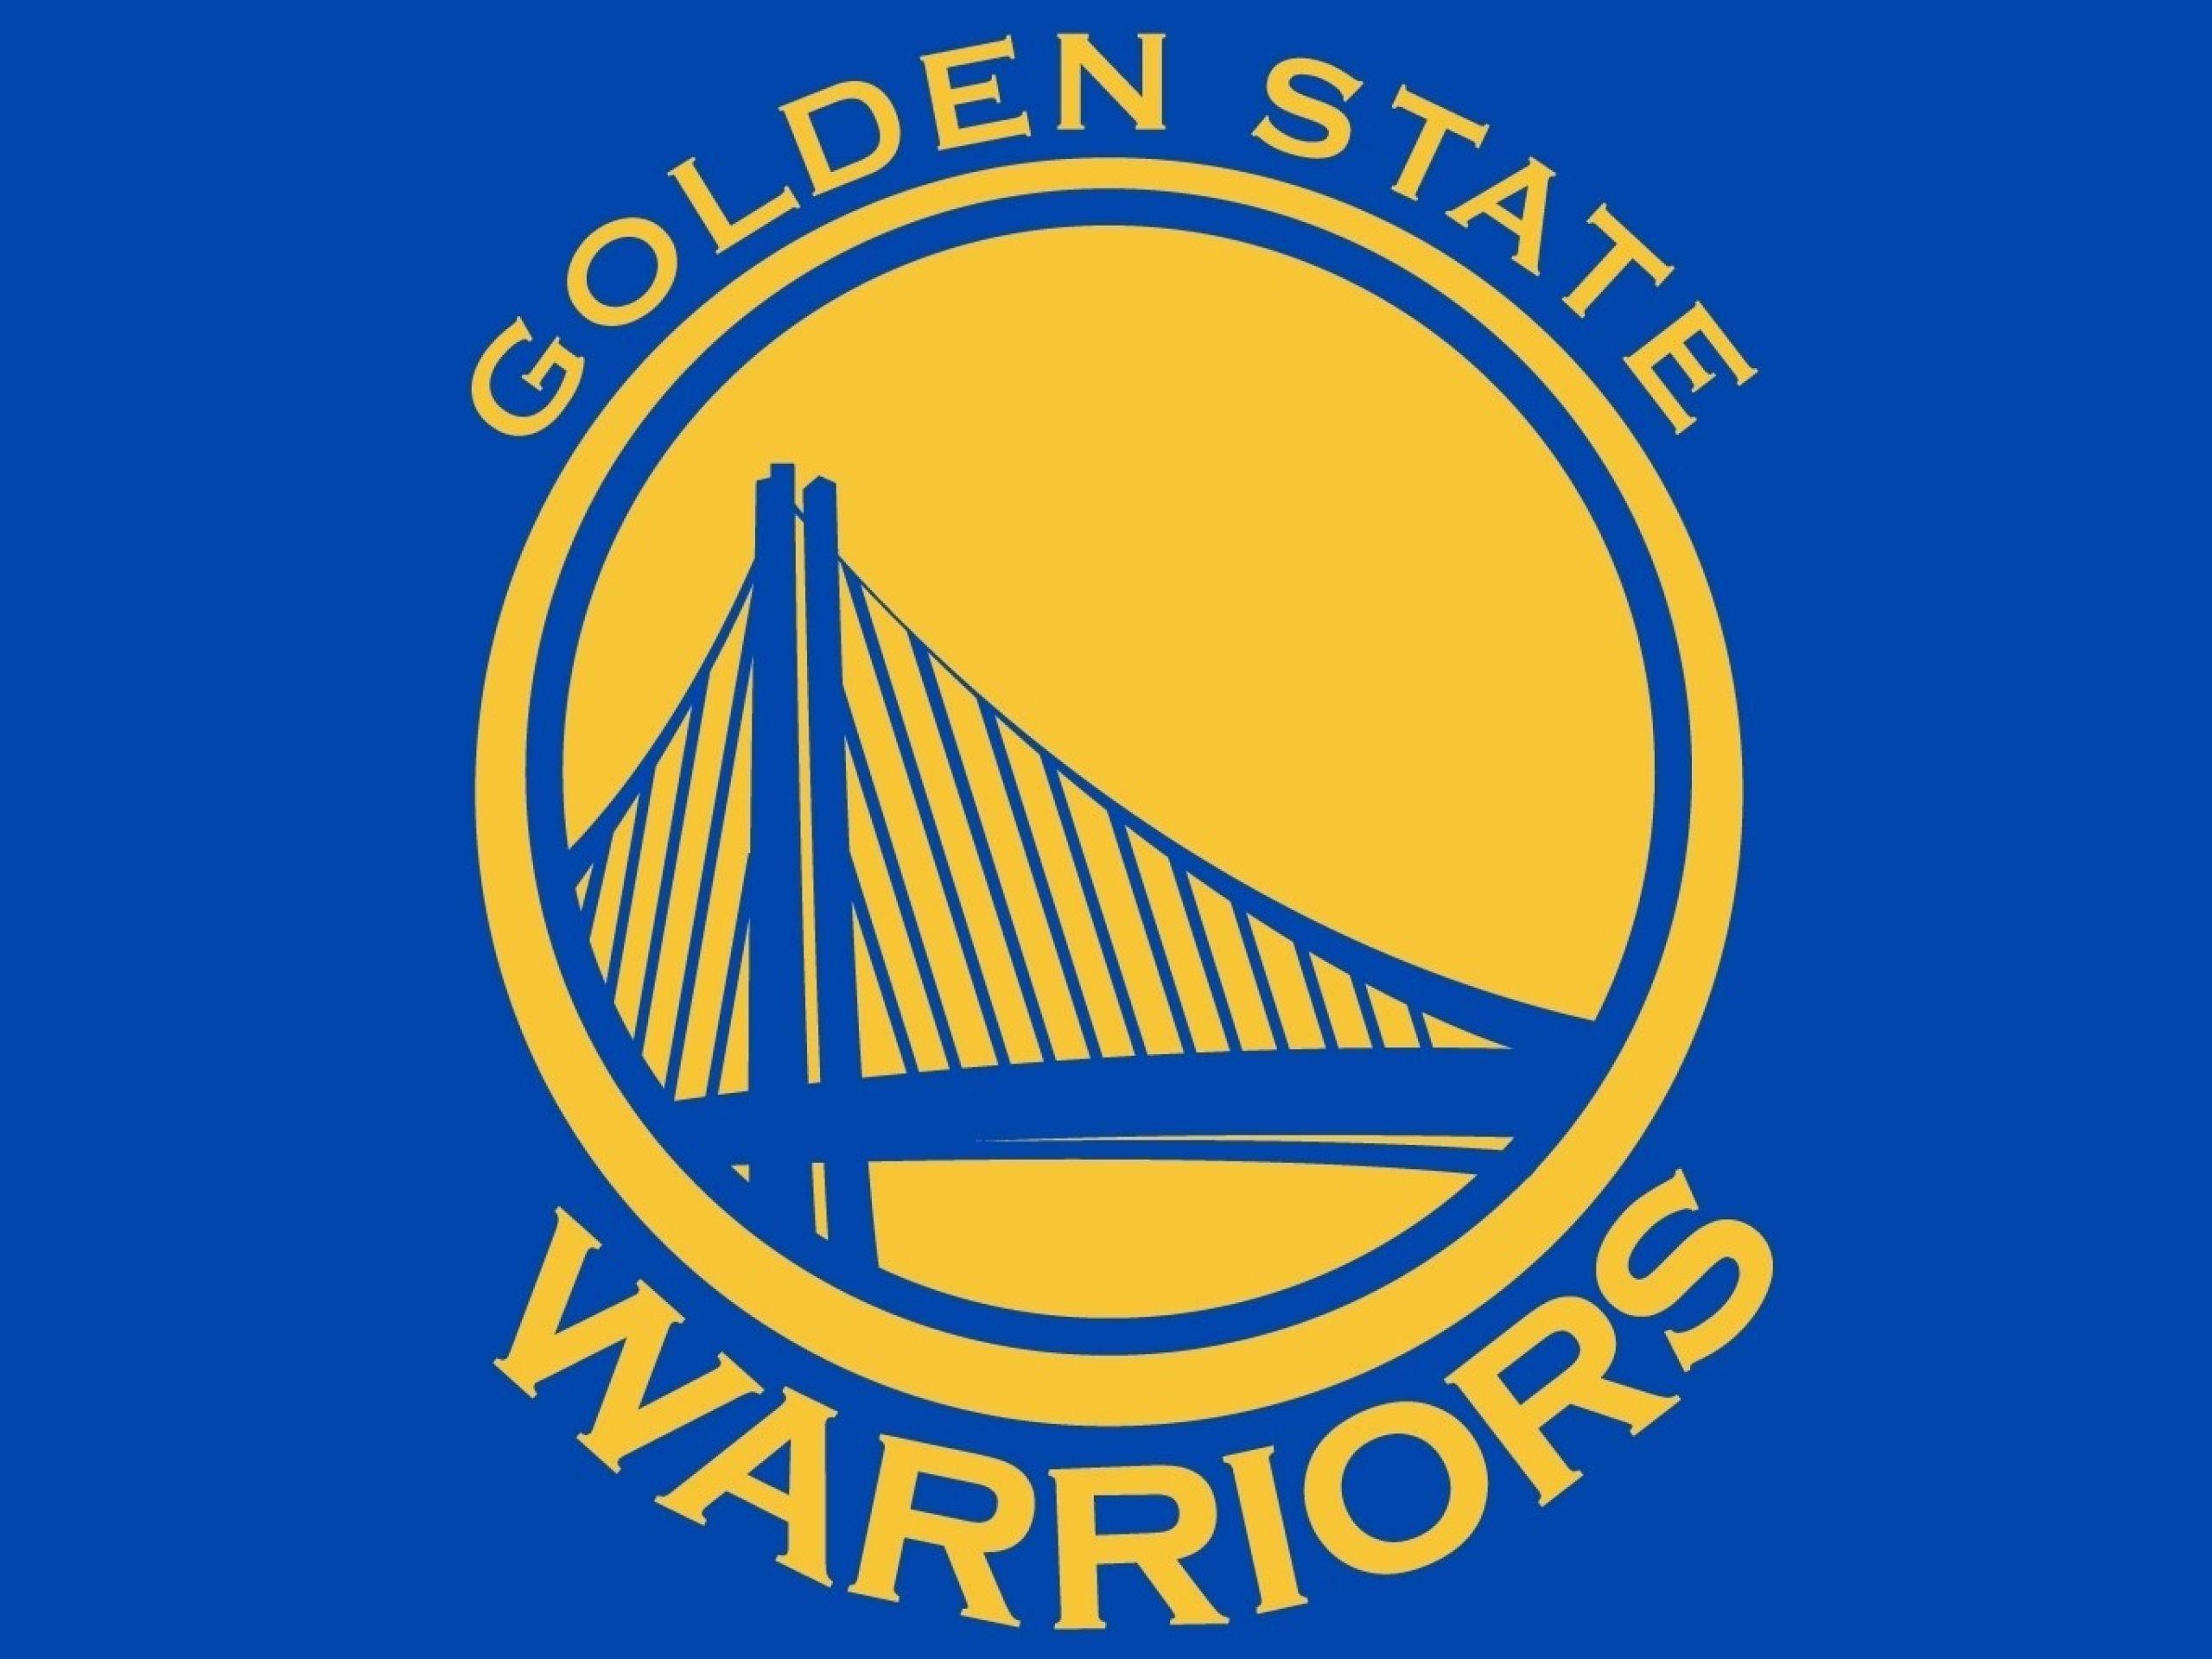 Golden State Warriors wallpaperDownload free stunning High